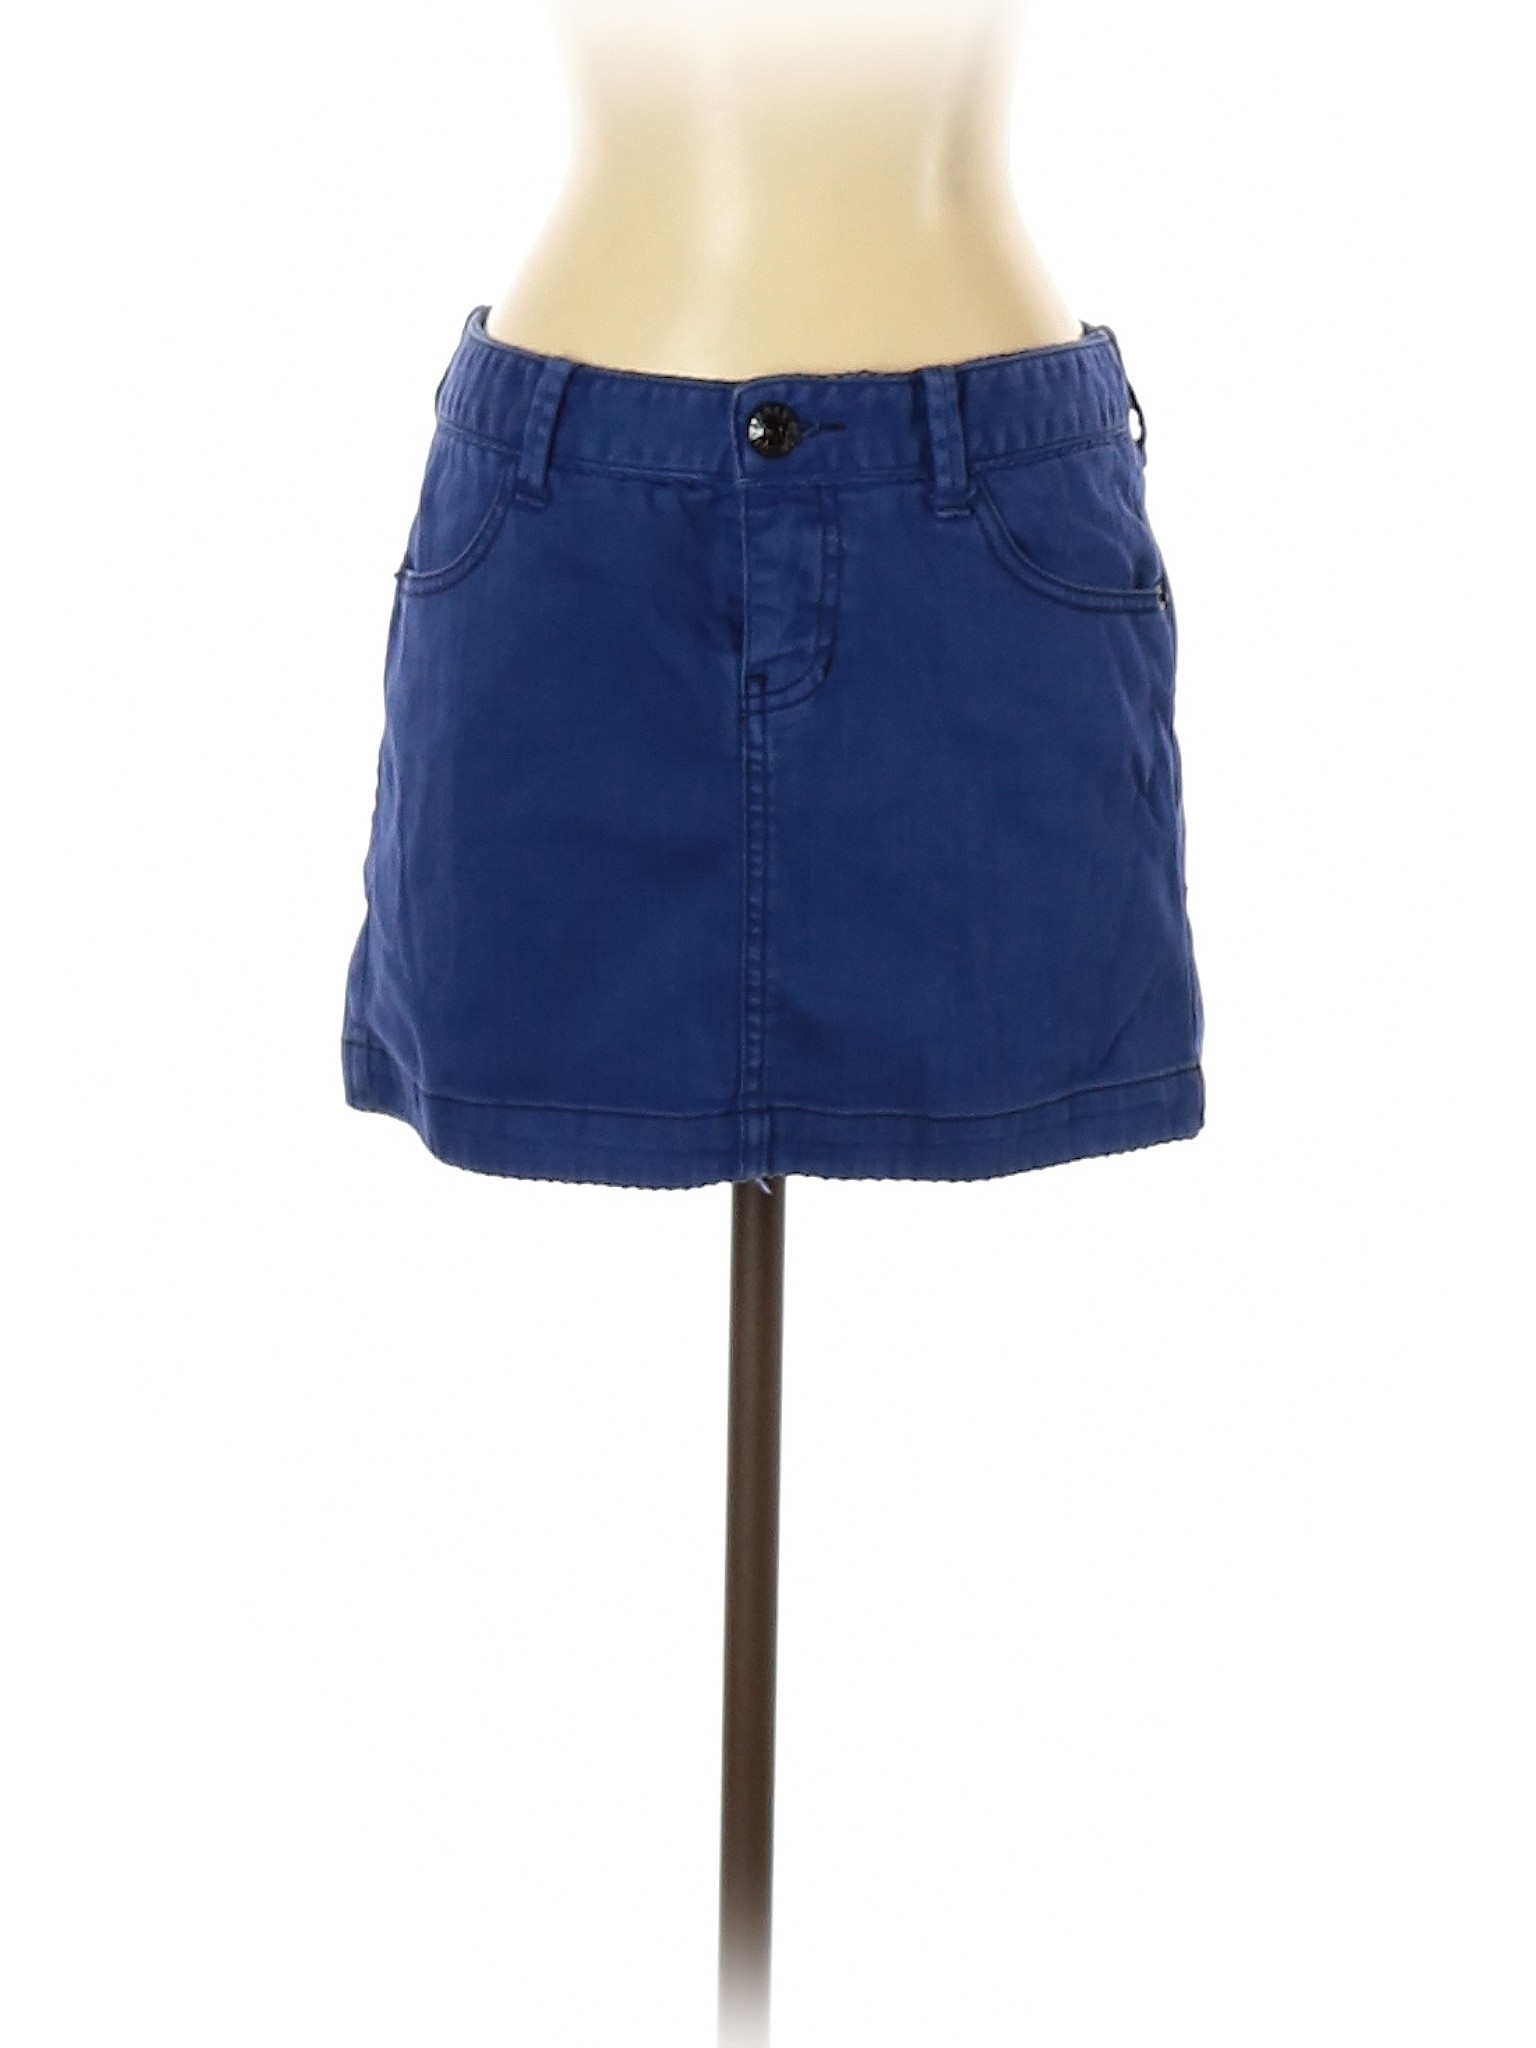 Assorted Brands Women Blue Denim Skirt 4 | eBay